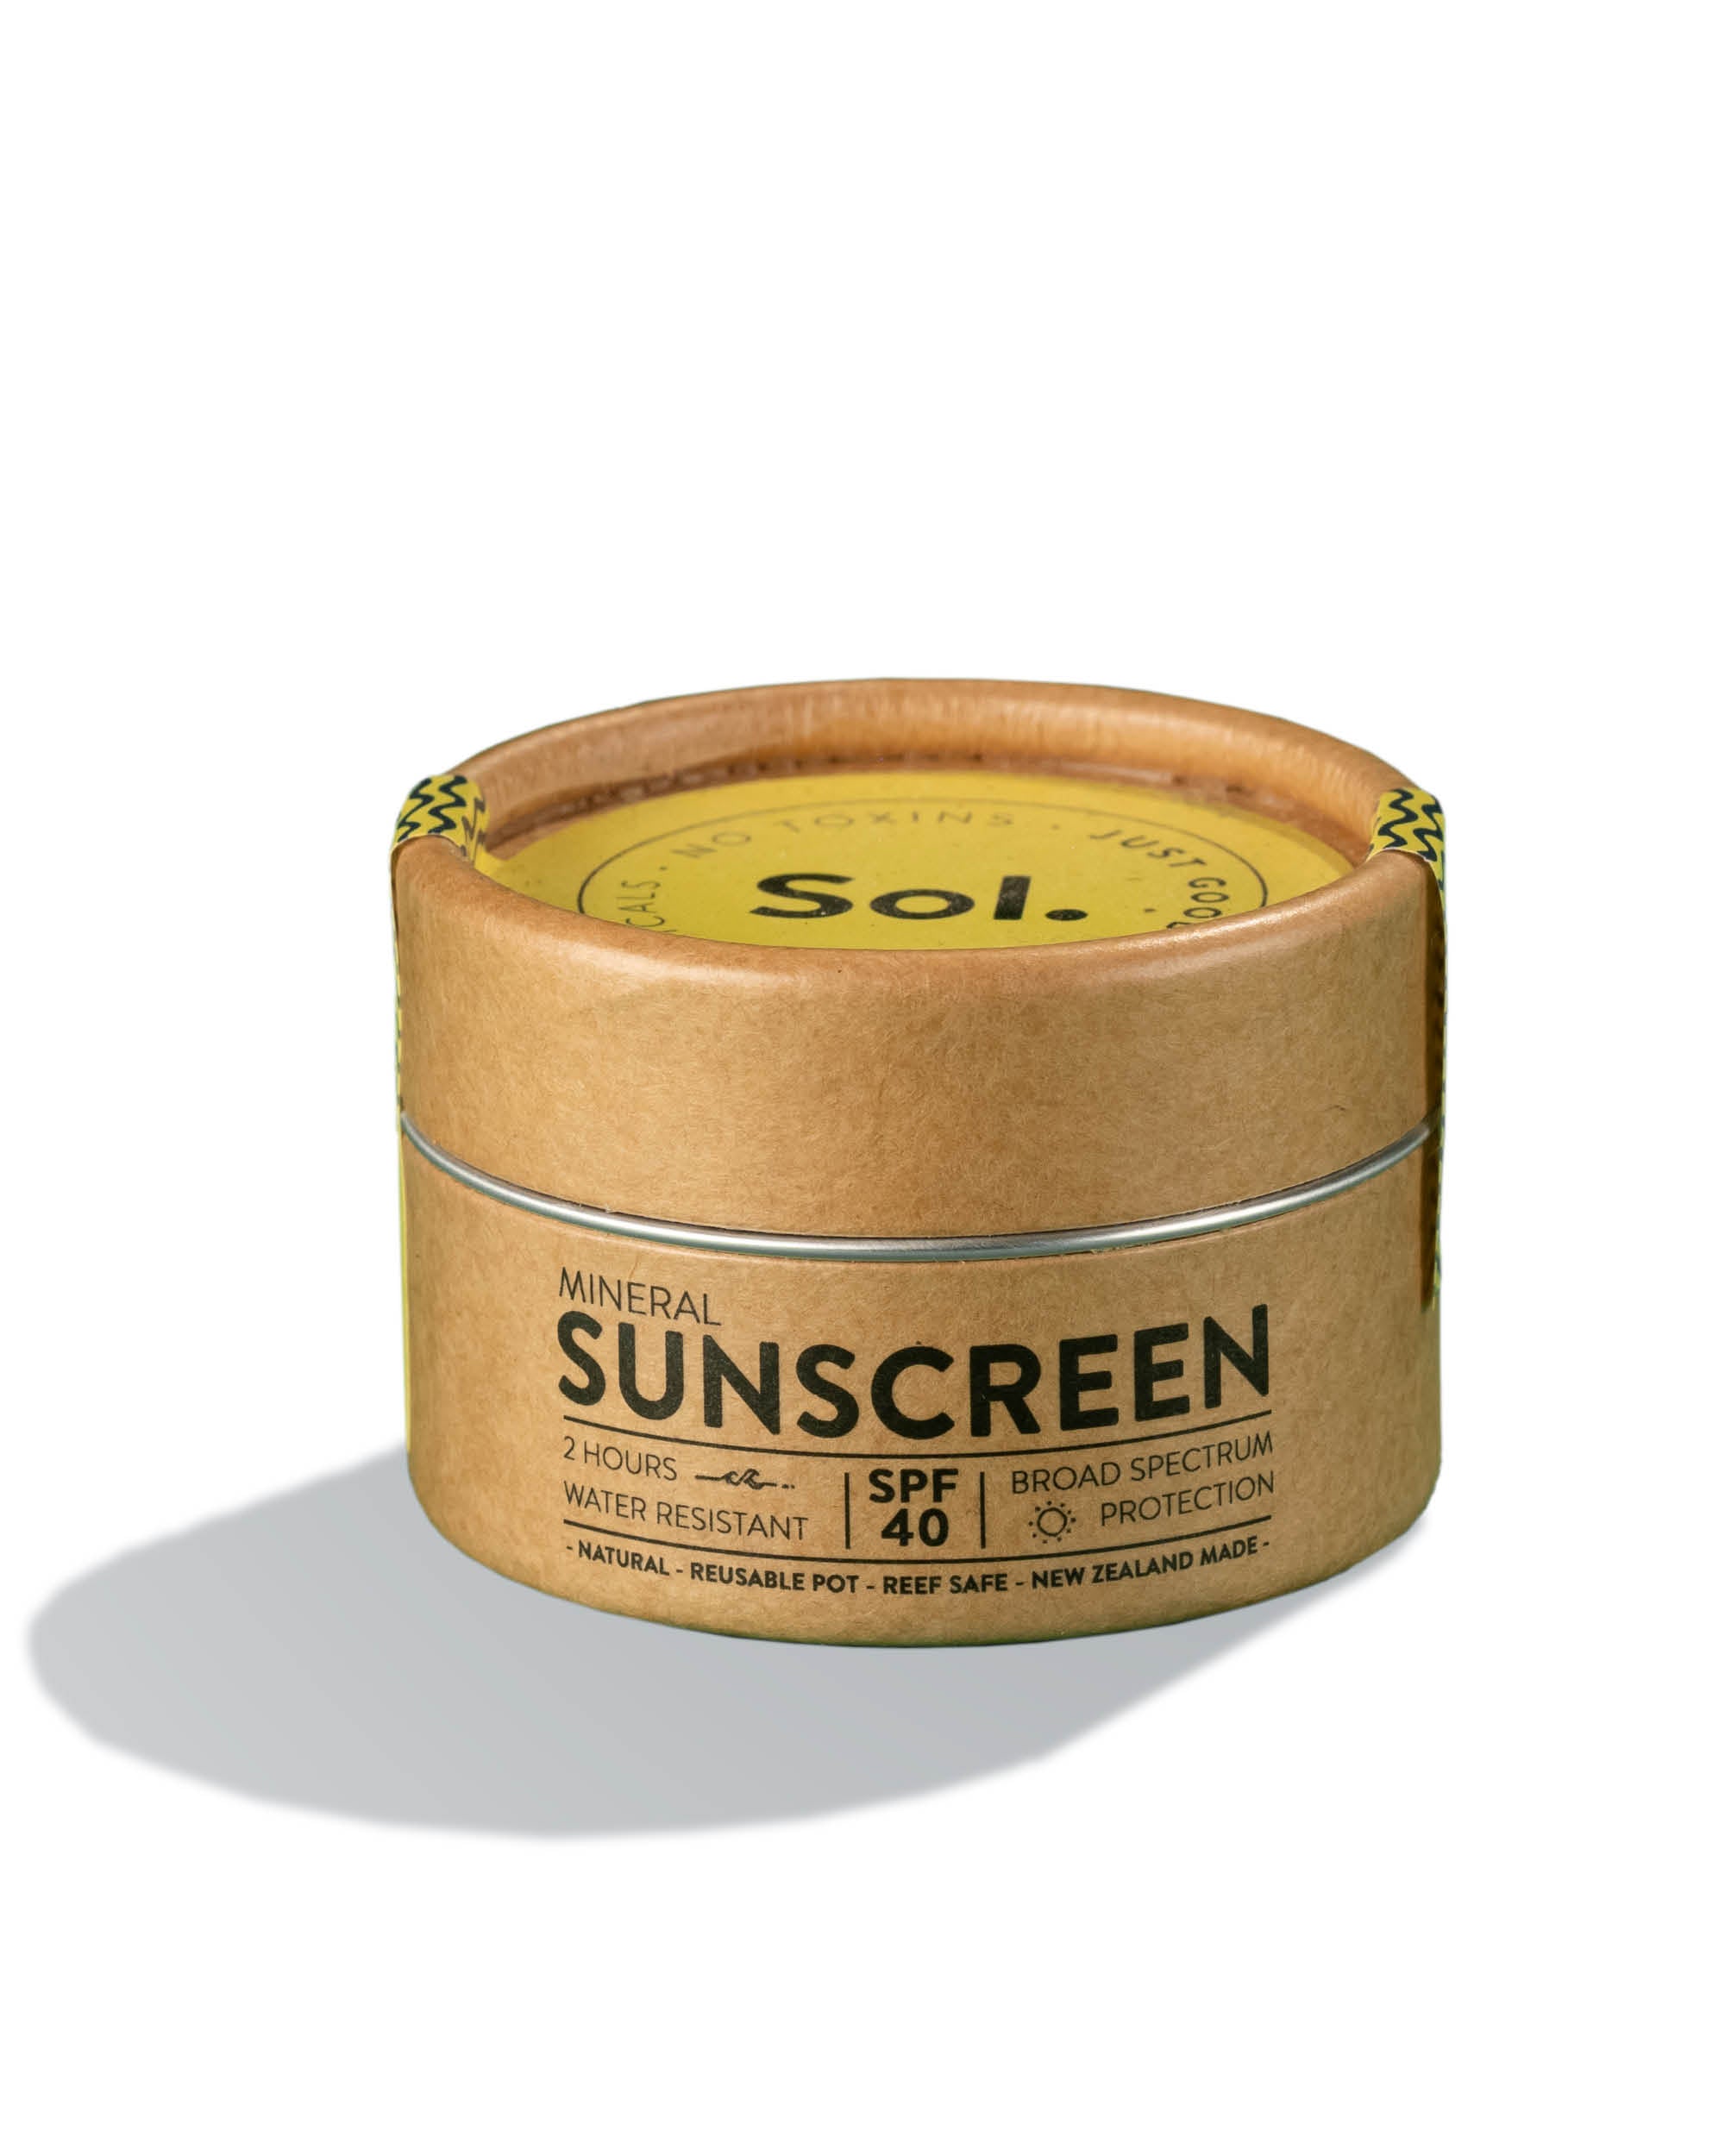 Sol. Sunscreen